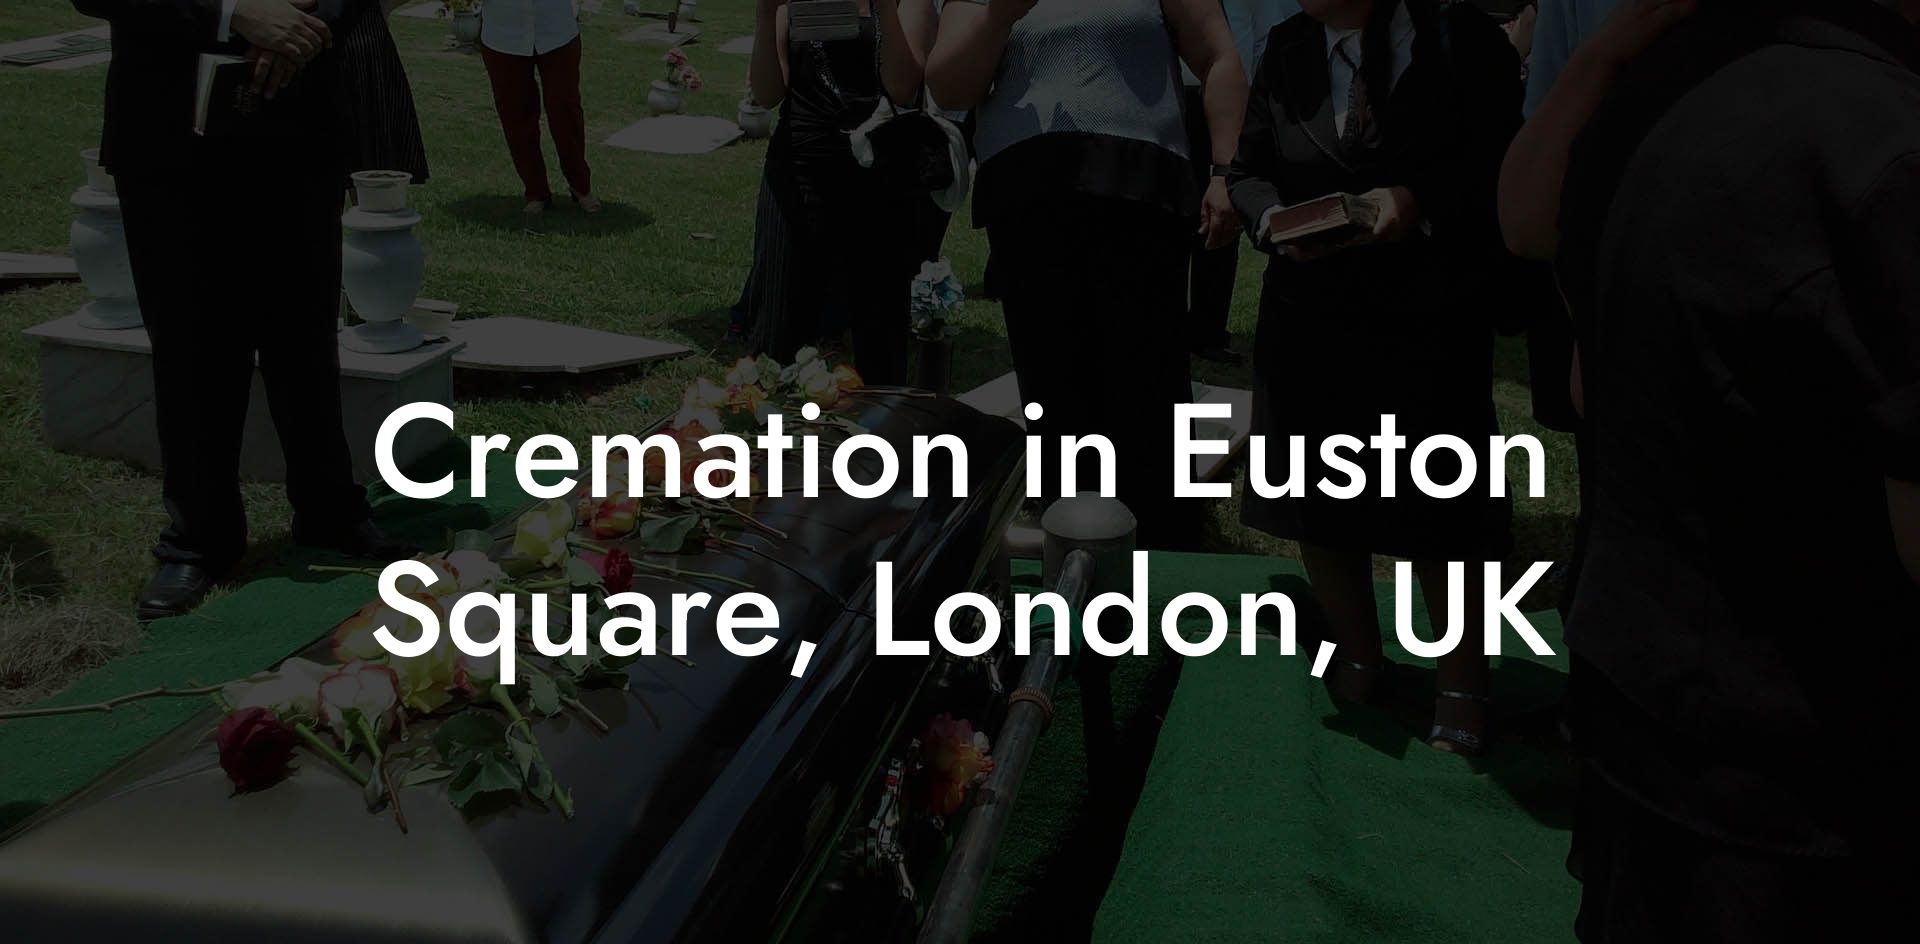 Cremation in Euston Square, London, UK